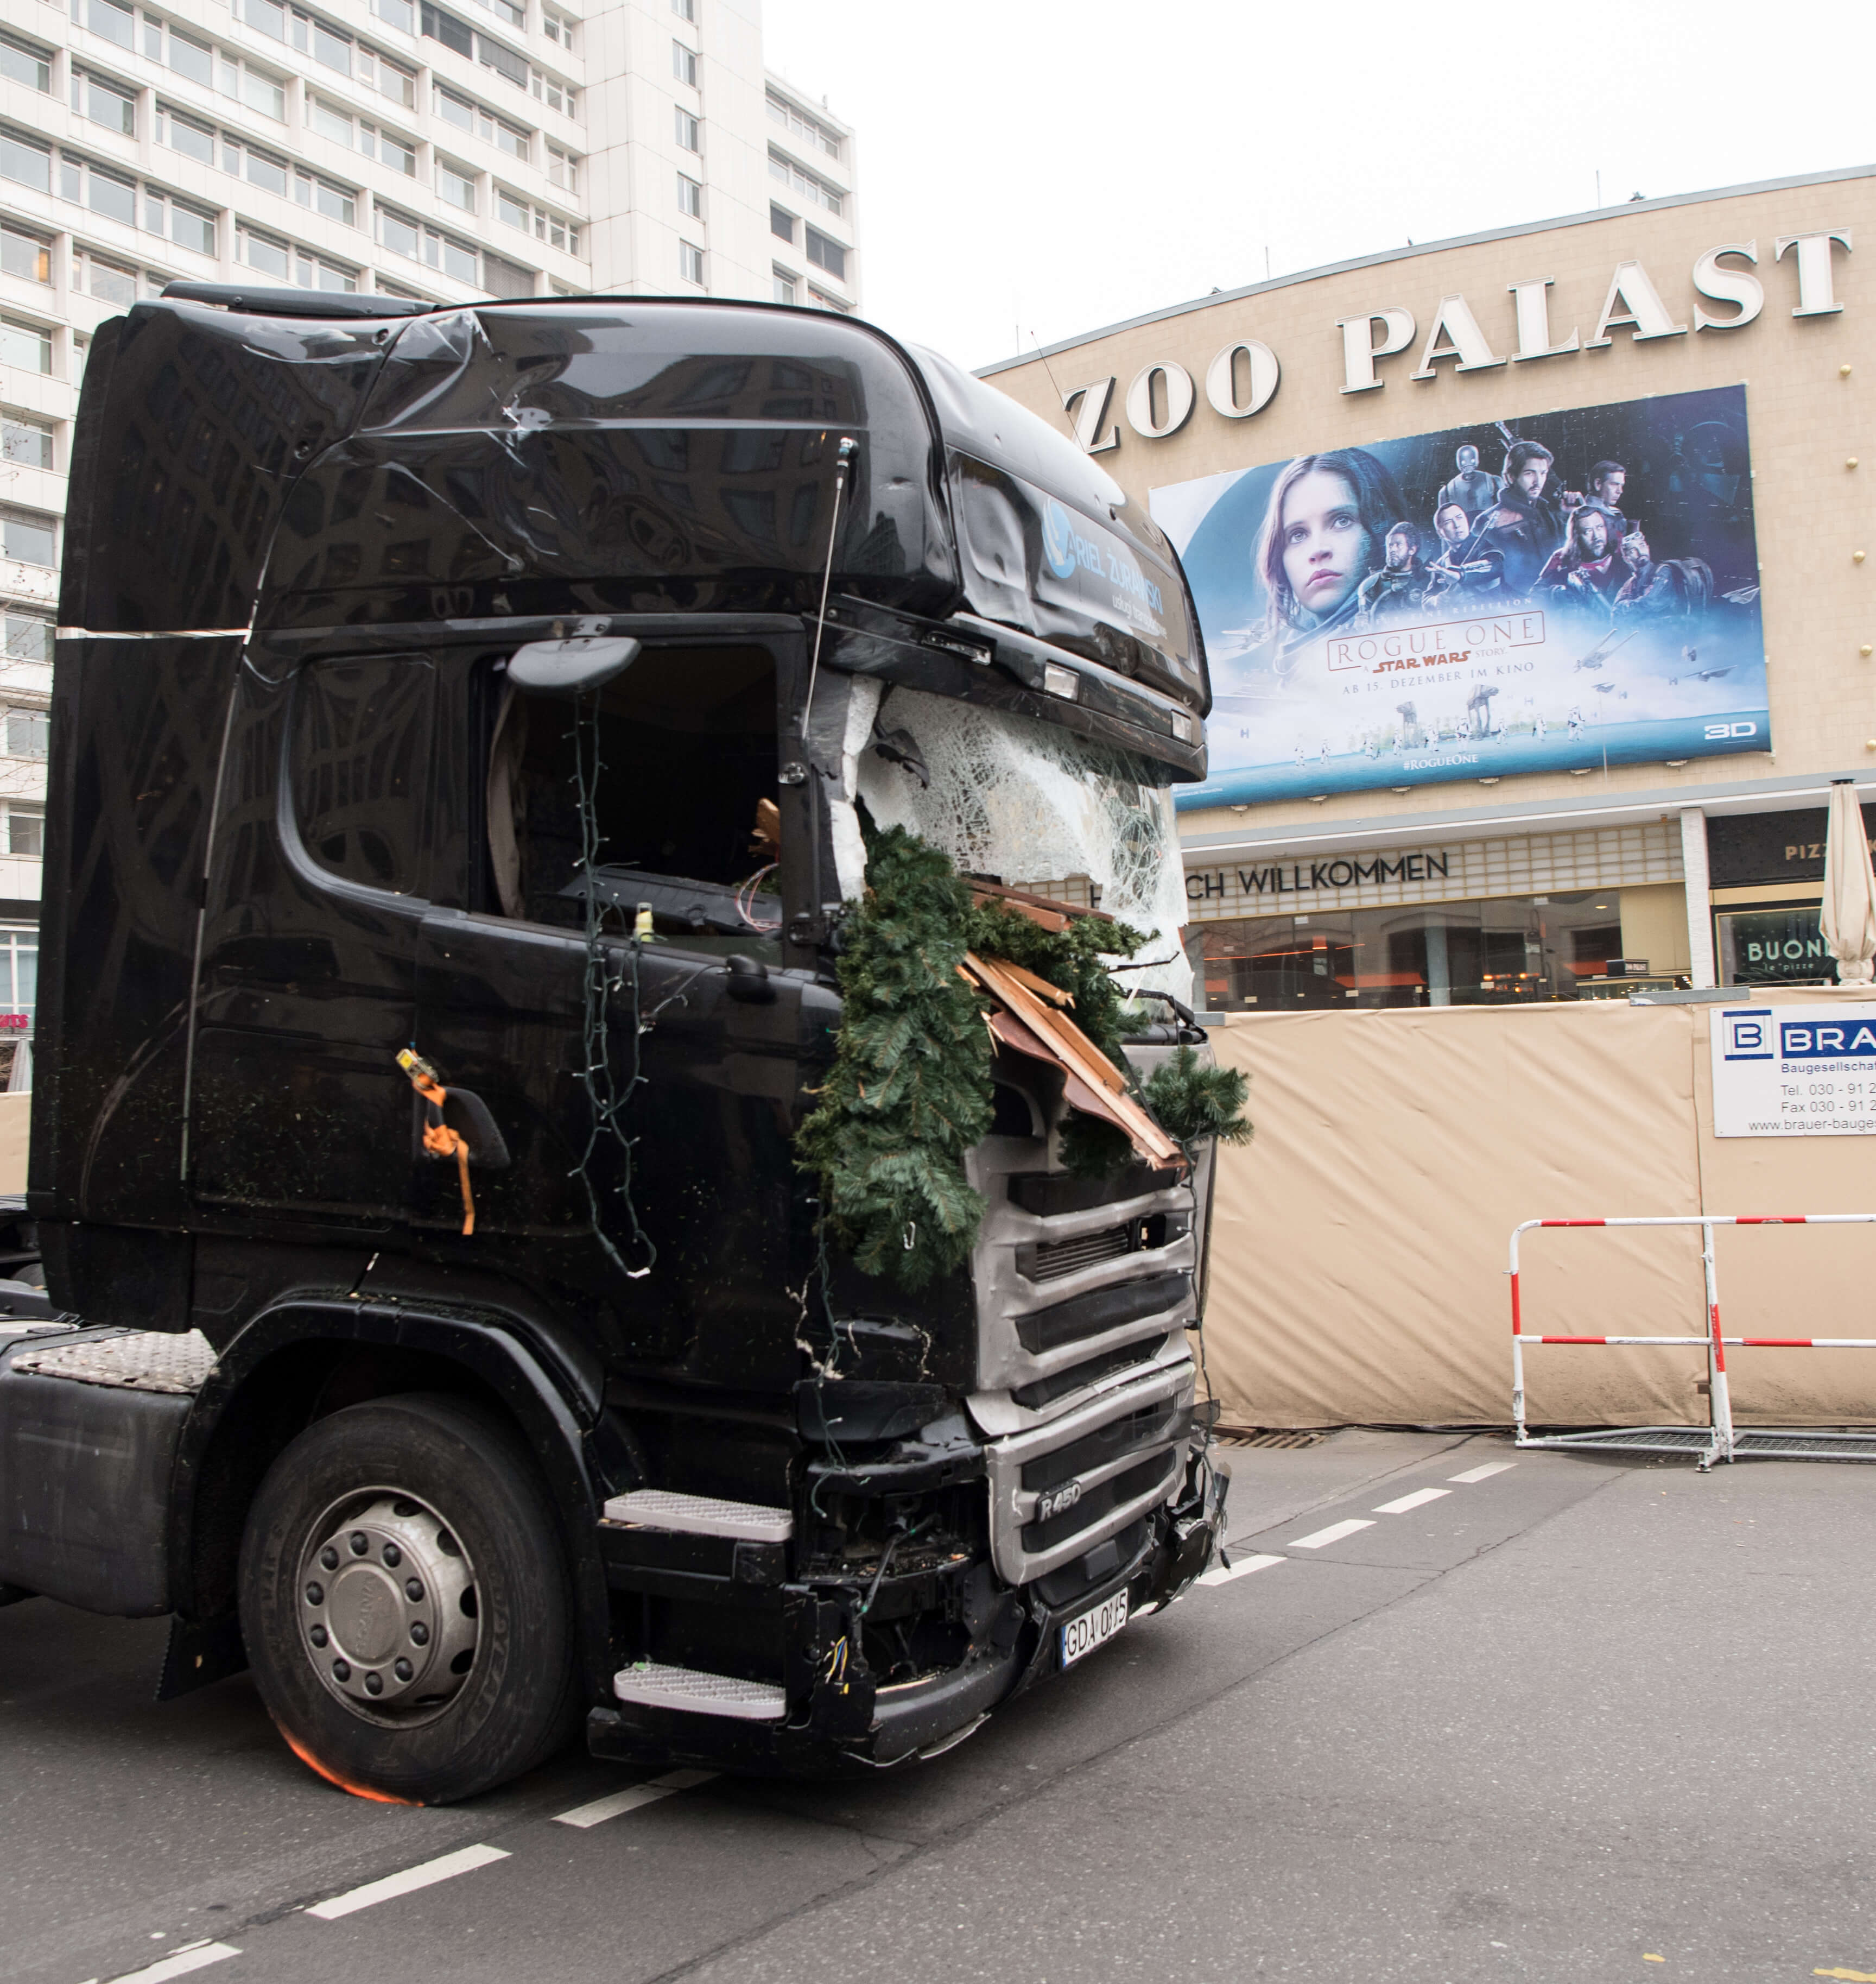 Empresa de camión que se usó en atentado en Berlín enfrenta problemas económicos